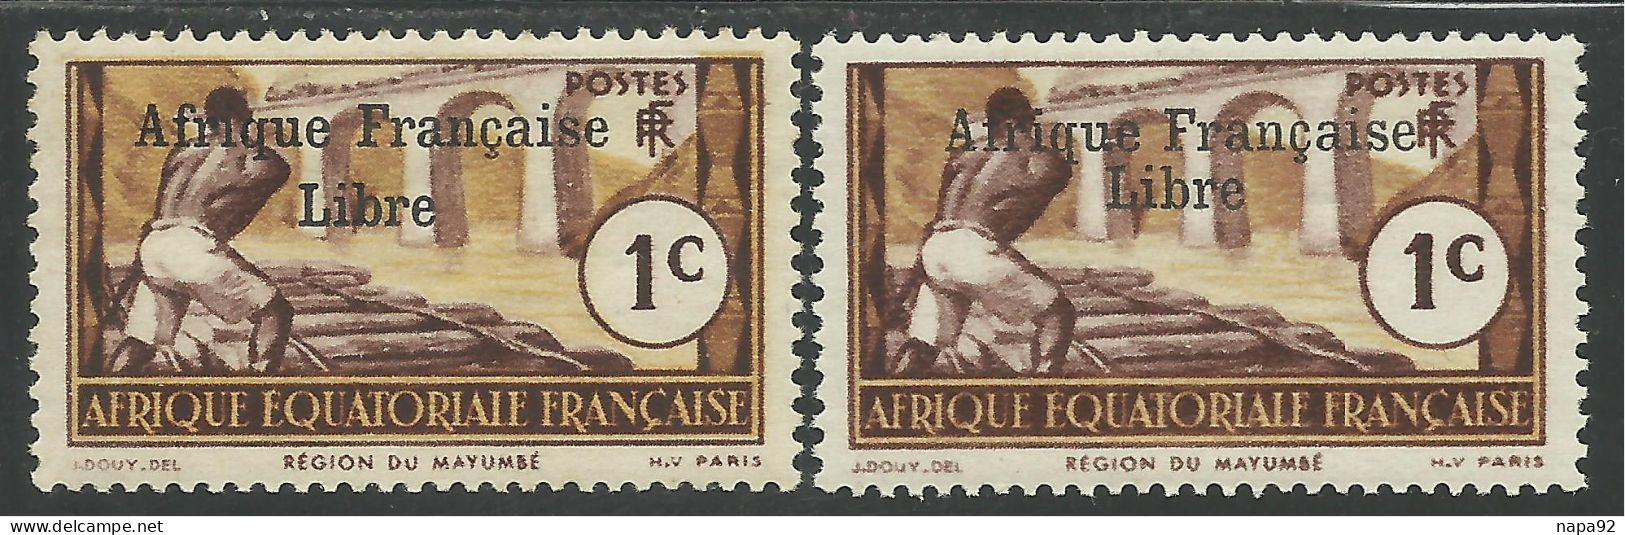 AFRIQUE EQUATORIALE FRANCAISE - AEF - A.E.F. - 1941 - YT 156** - 2ème TIRAGE - Nuevos